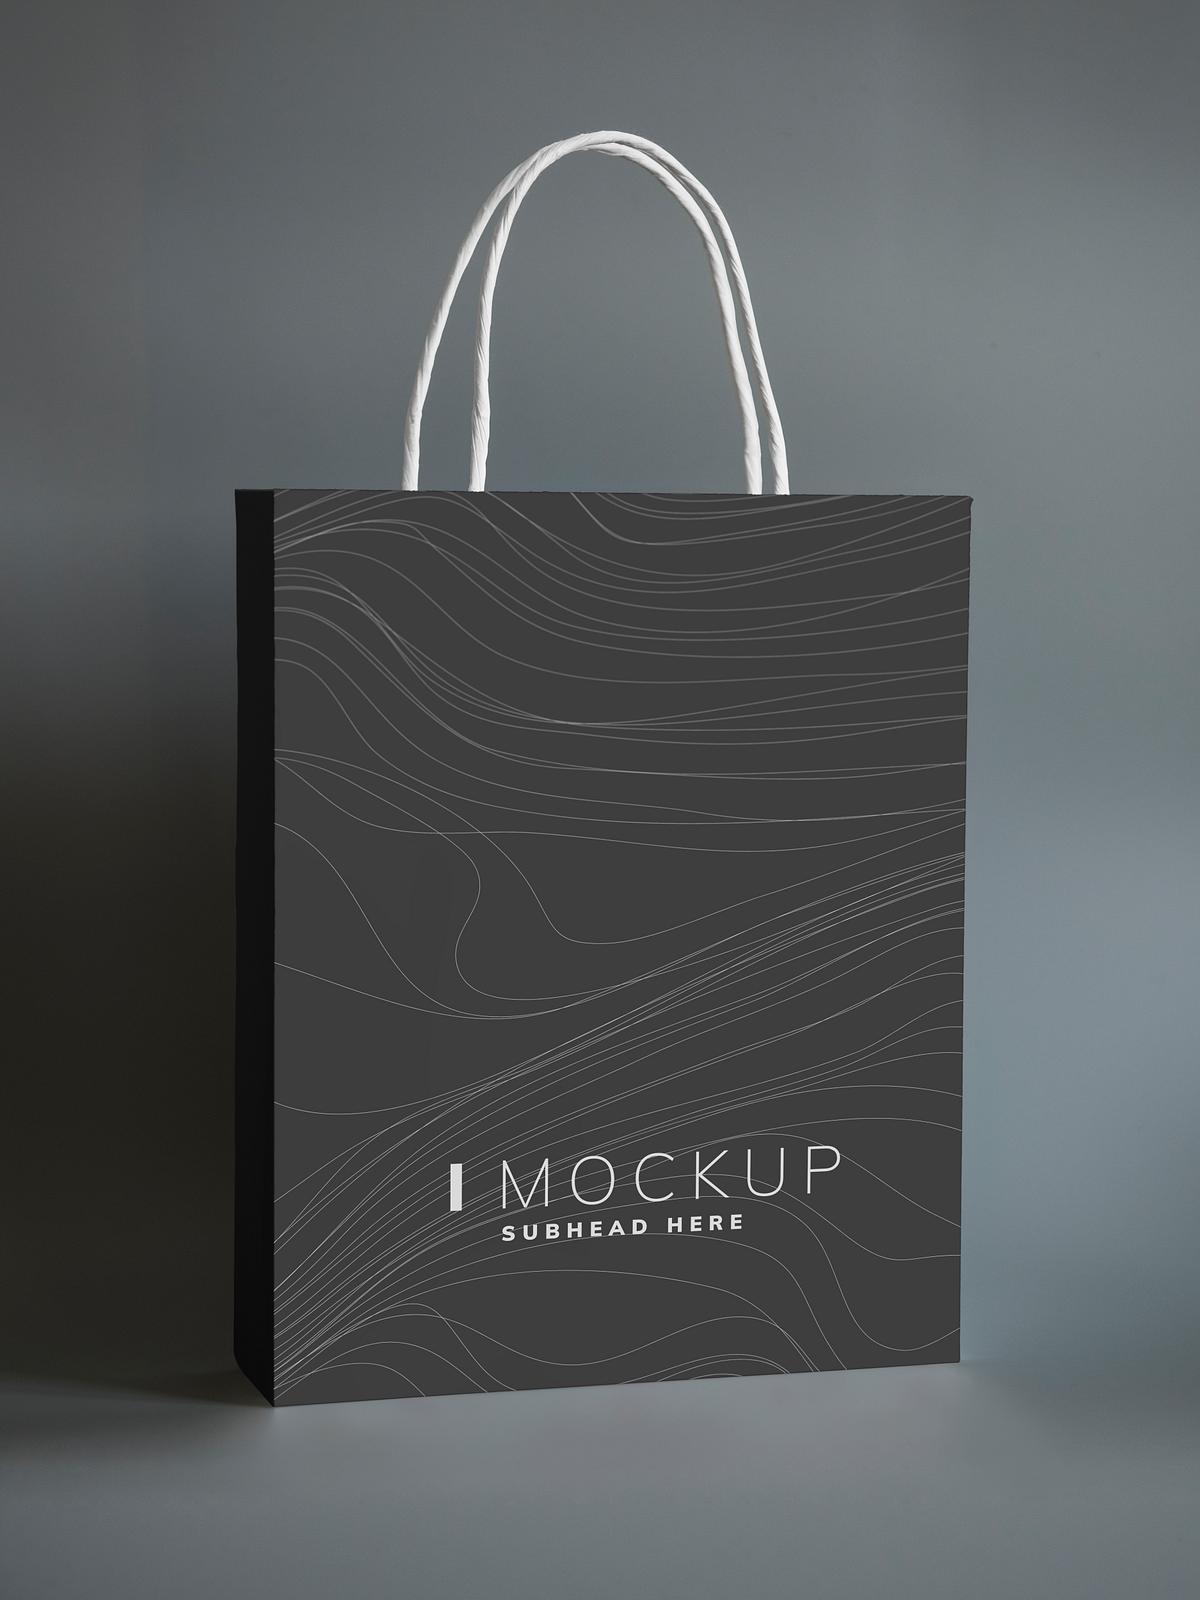 Download Black paper bag design mockup | Royalty free stock psd ...